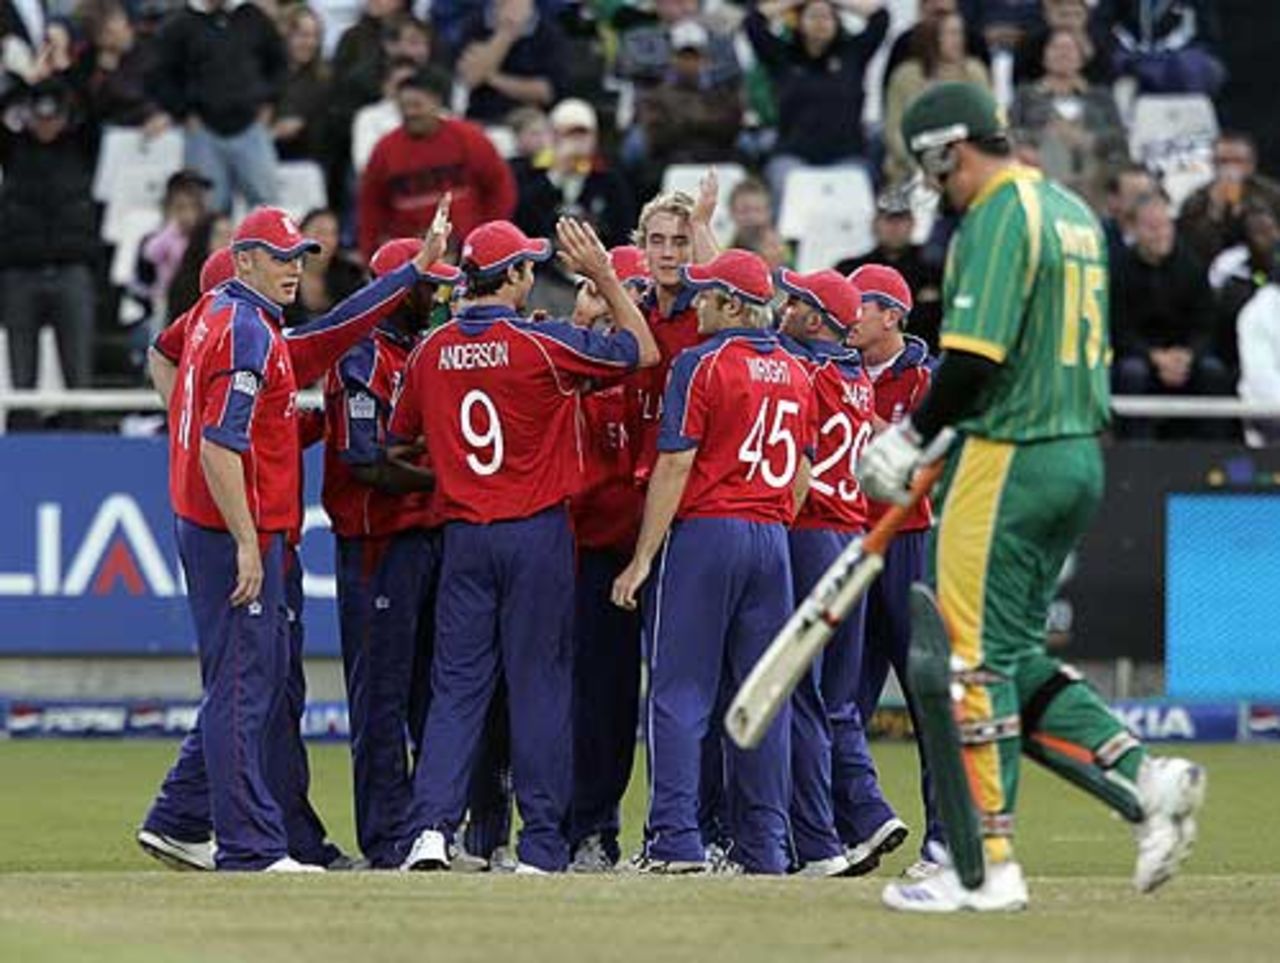 Graeme Smith departs for 19 as England's fielders celebrate, Group E, ICC World Twenty20, Cape Town, September 16, 2007